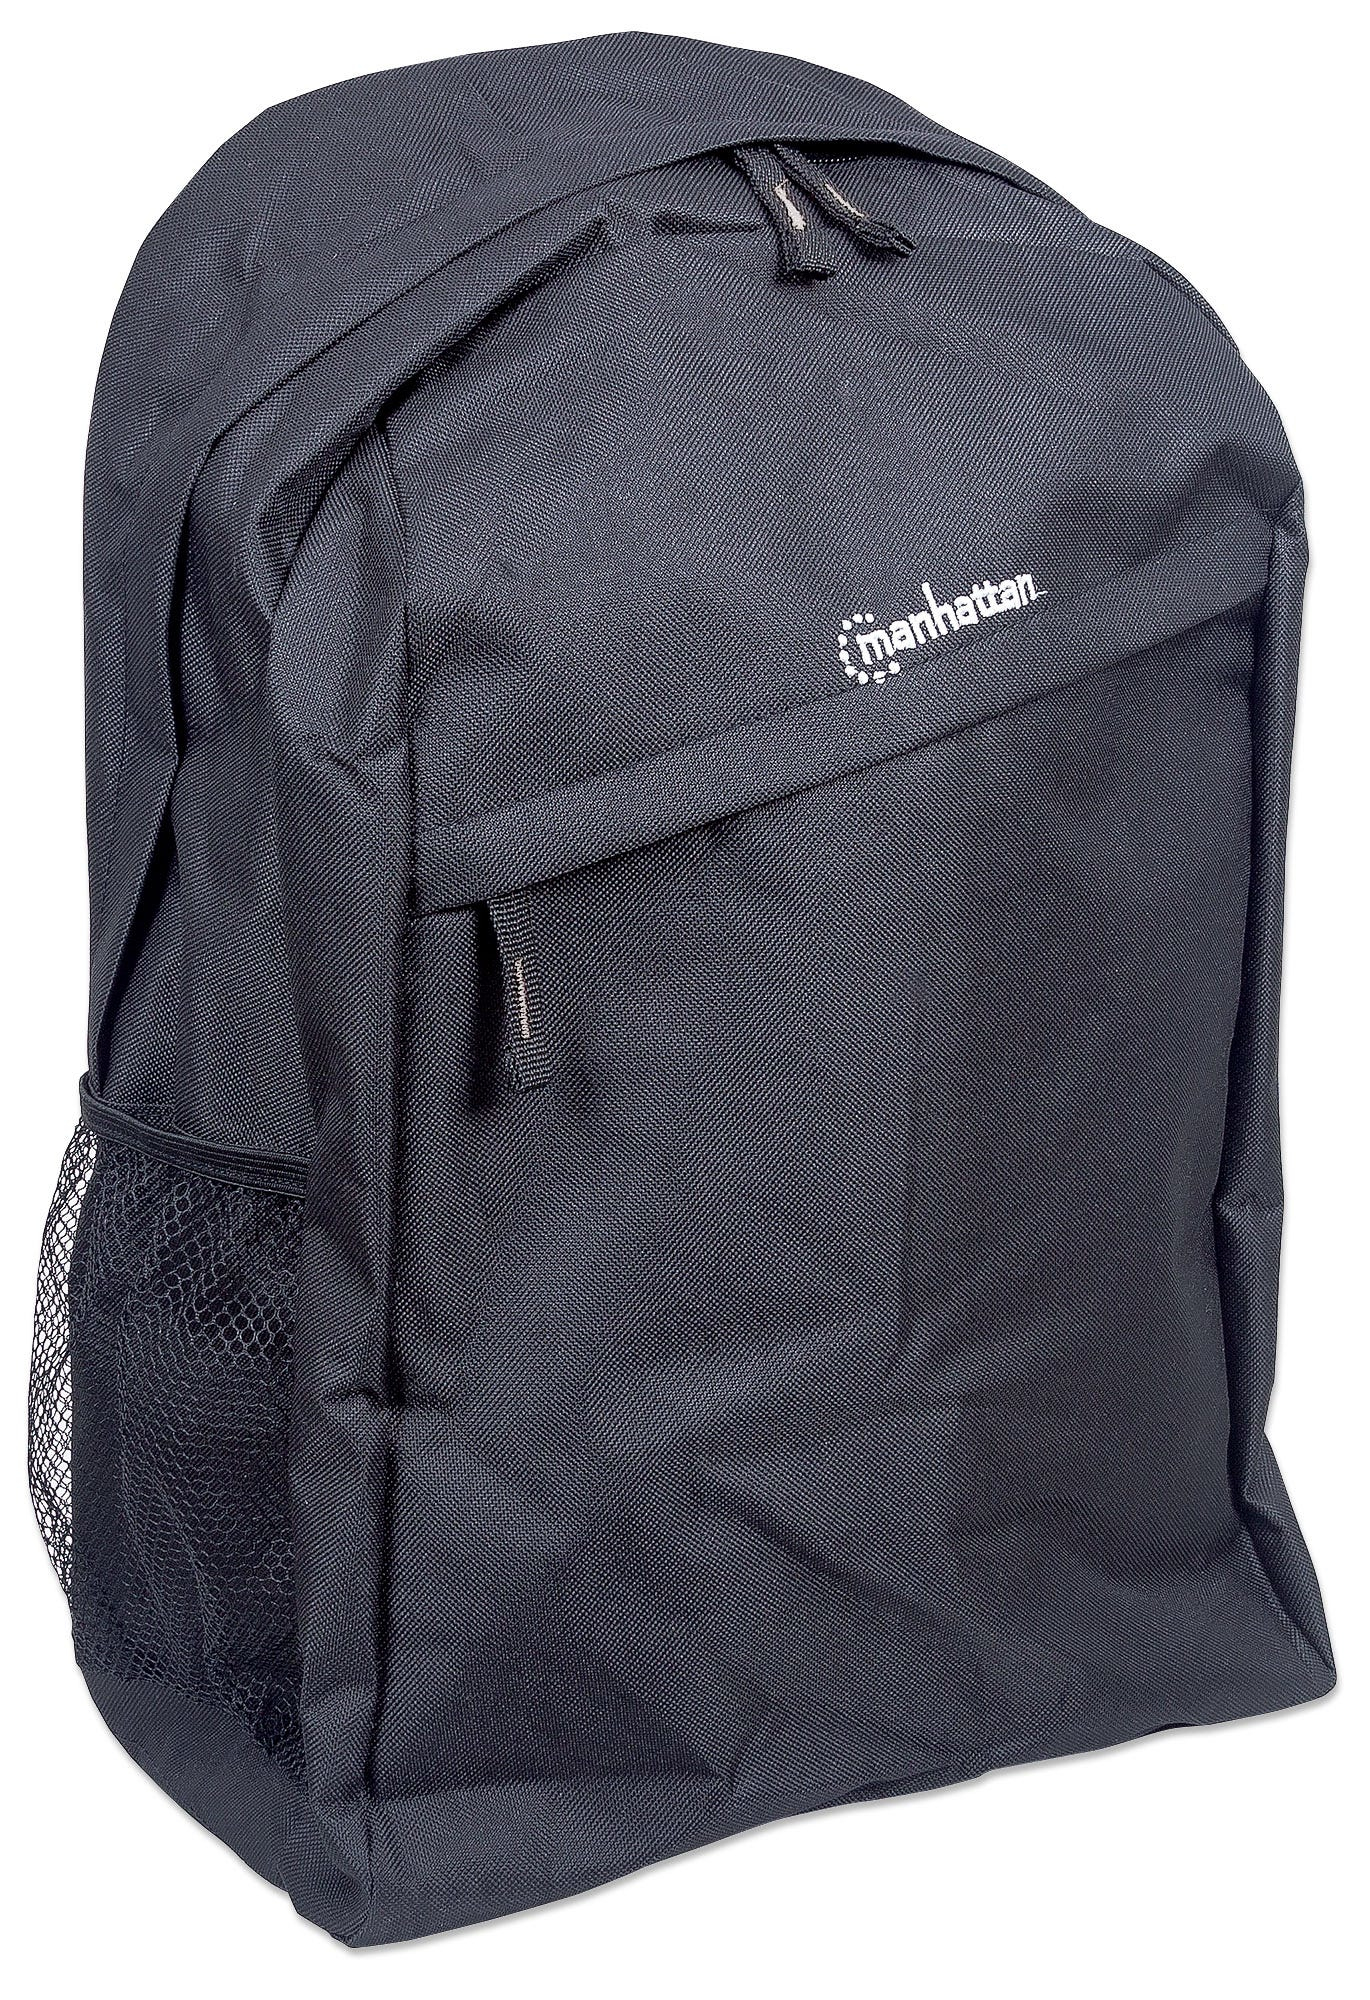 Manhattan Knappack Backpack 15.6", Lightweight, Internal Laptop Sleeve, Accessories Pocket, Padded Adjustable Shoulder Straps, Water Bottle Holder, Black, Three Year Warranty